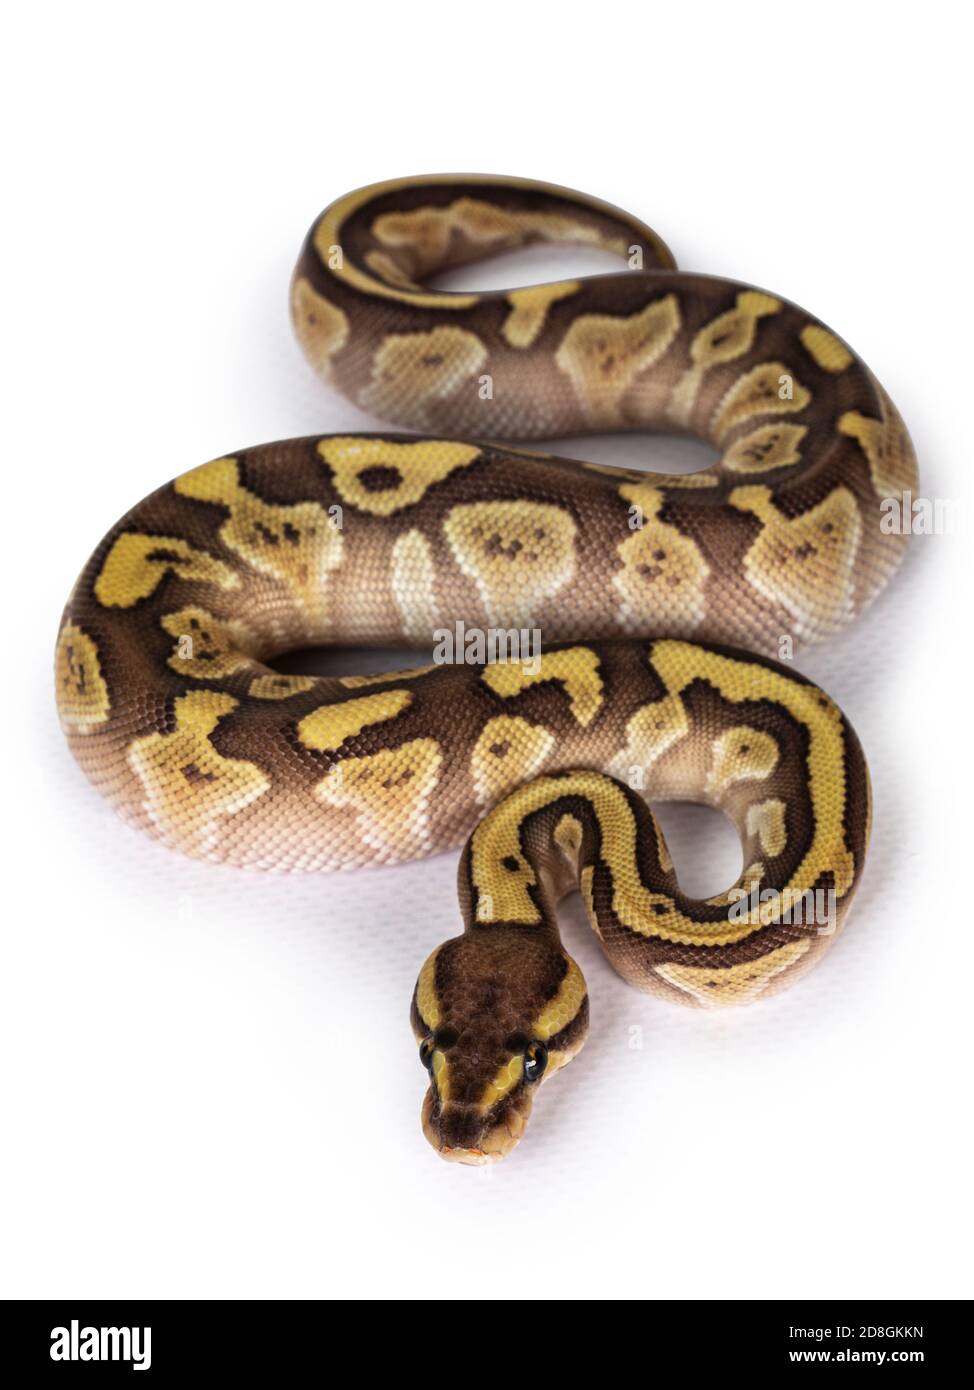 Baby female Lesser Pastel Ballpython aka Python Regius. Top view. Isolated on white background. Stock Photo